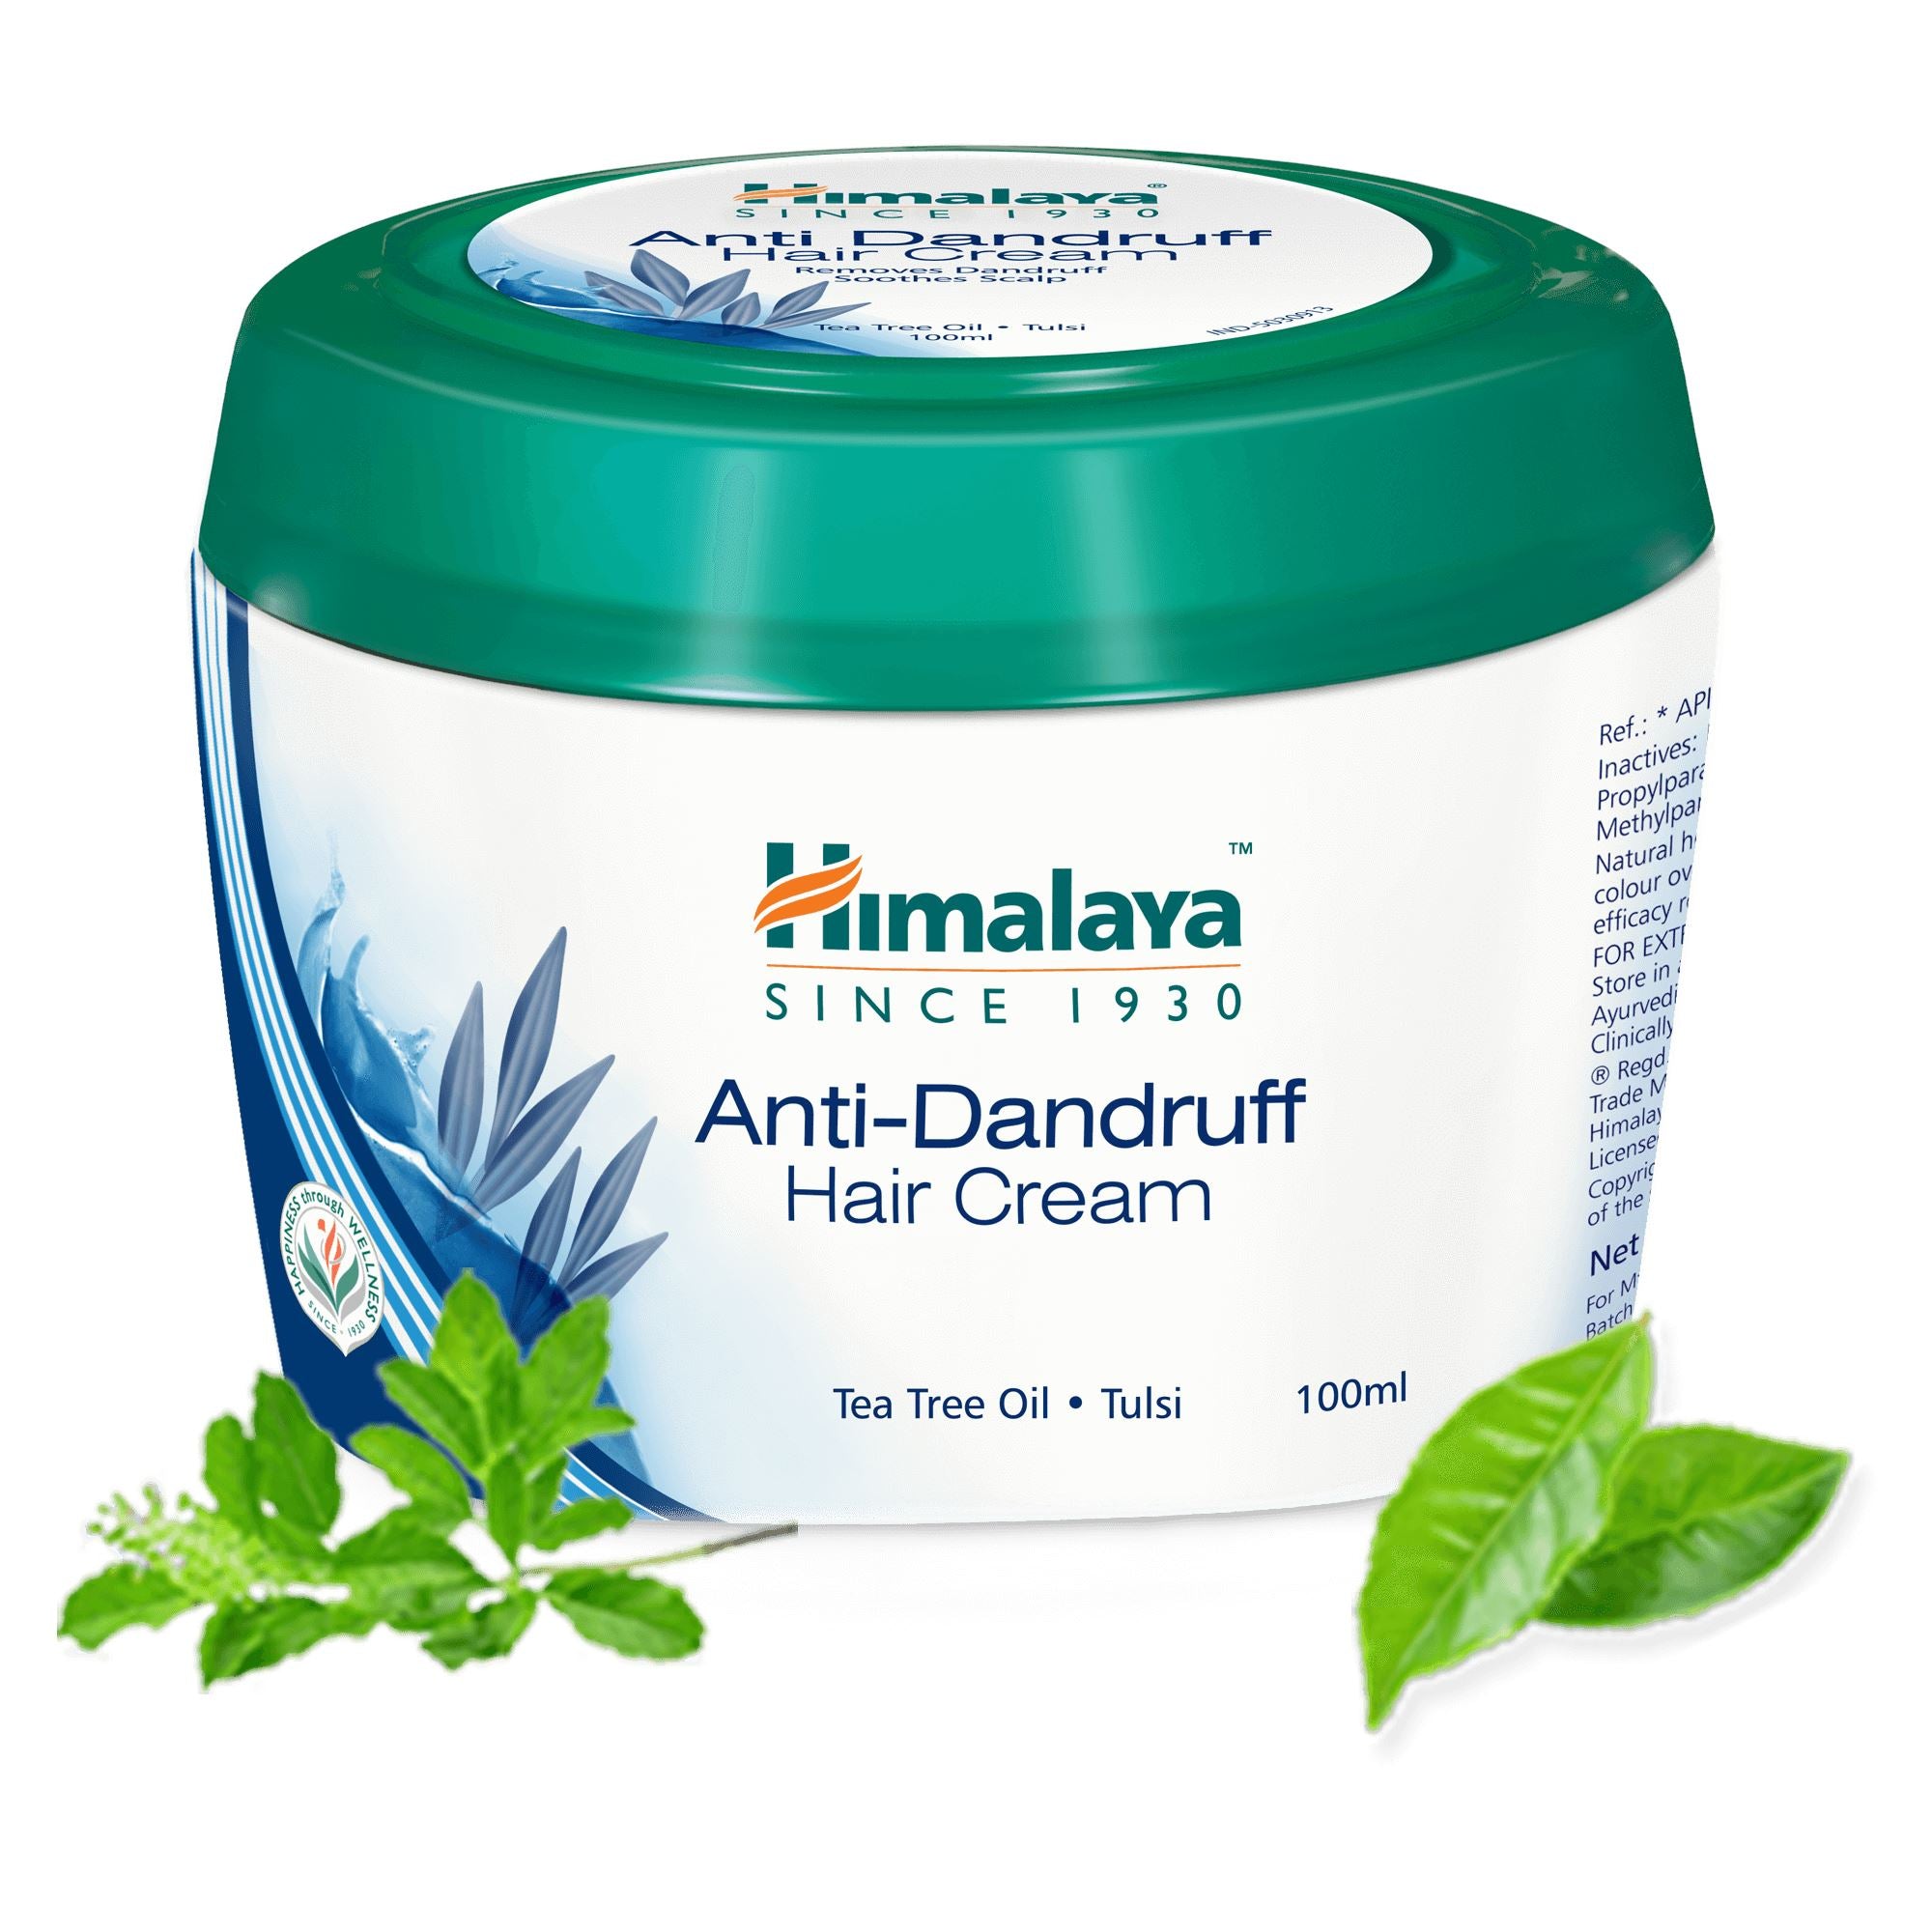 Himalaya Anti-Dandruff Hair Cream - Removes dandruff, nourishes scalp